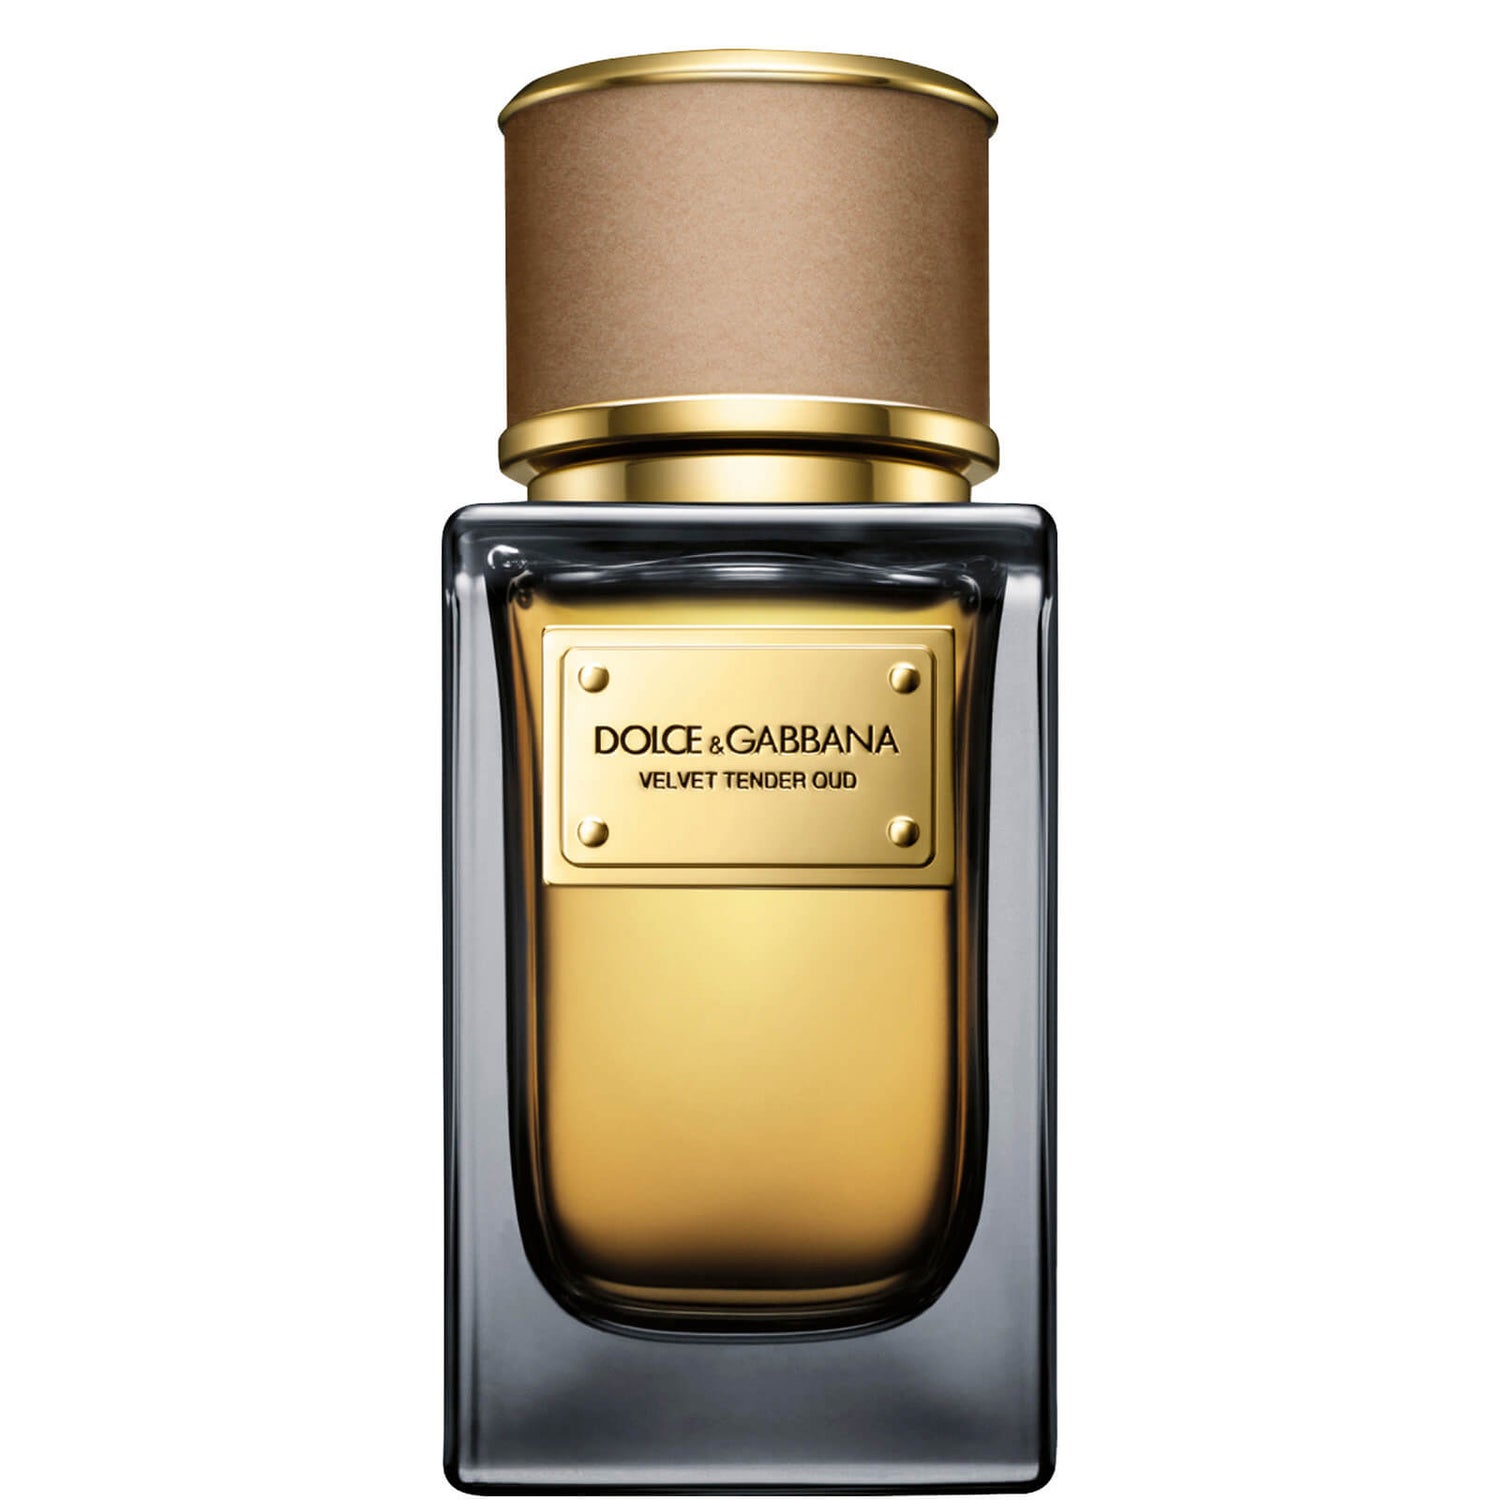 Dolce&Gabbana Velvet Tender Oud Eau de Parfum - 50ml - LOOKFANTASTIC